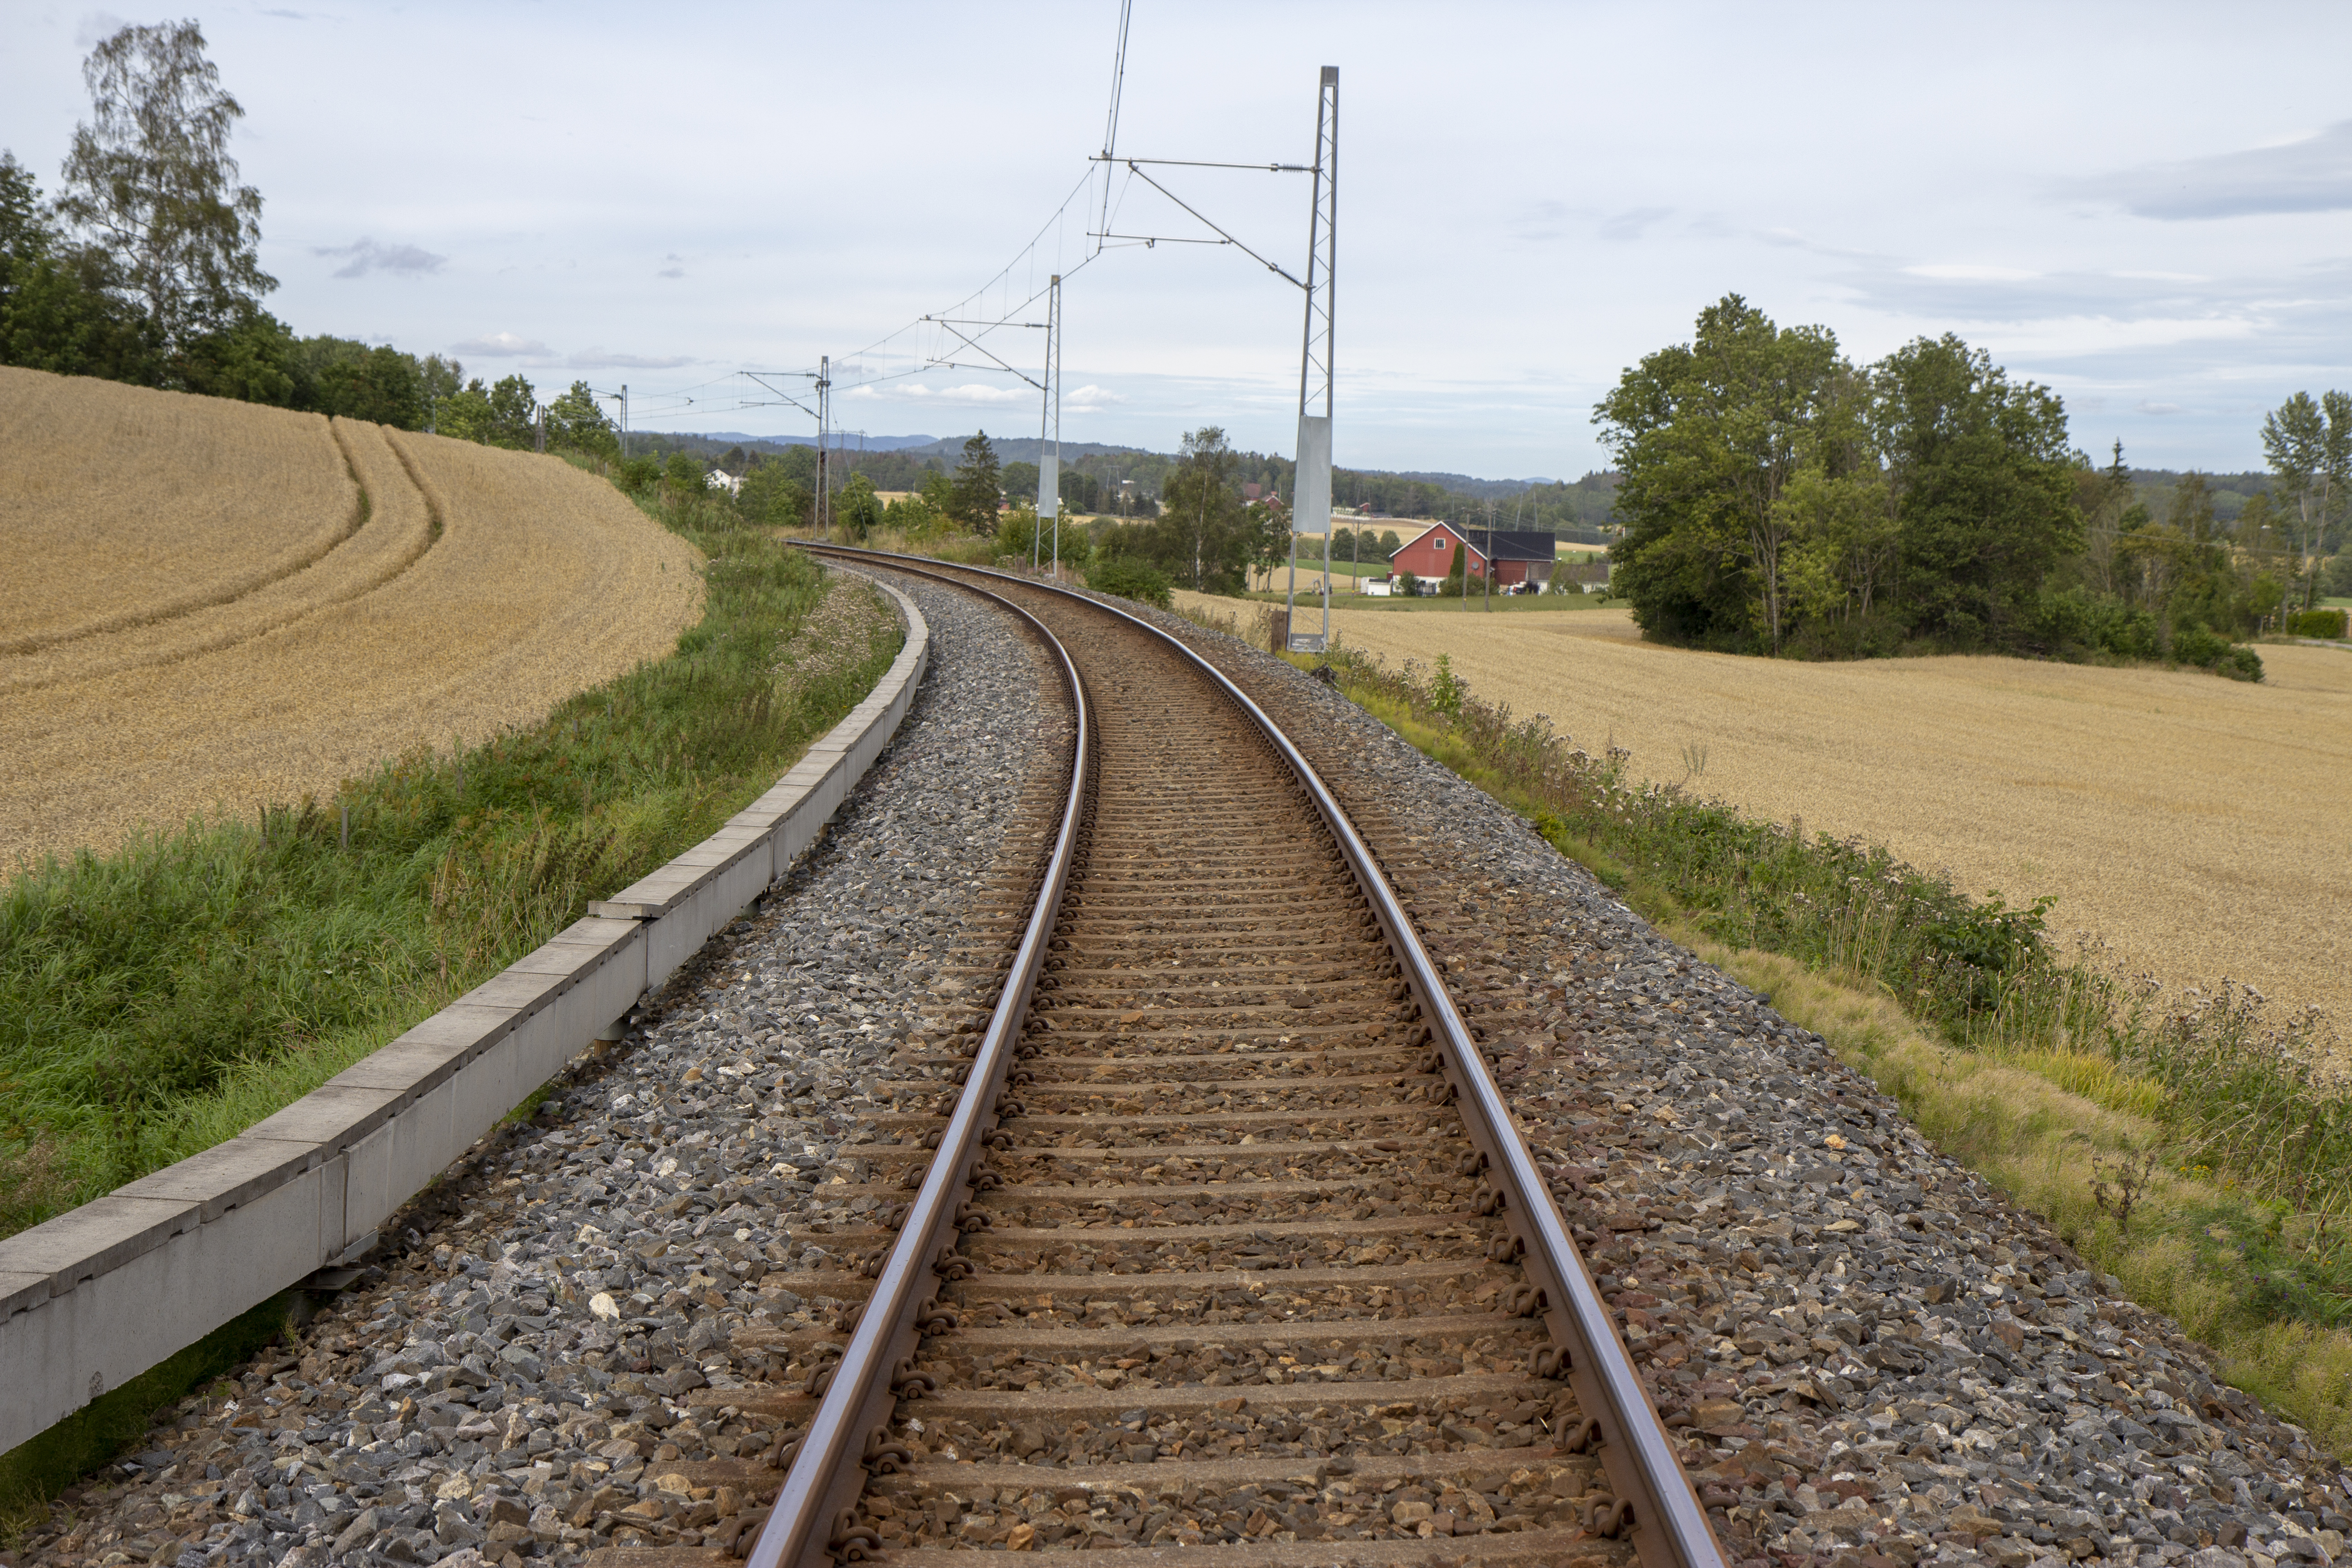 The Vestfold Line in Norway